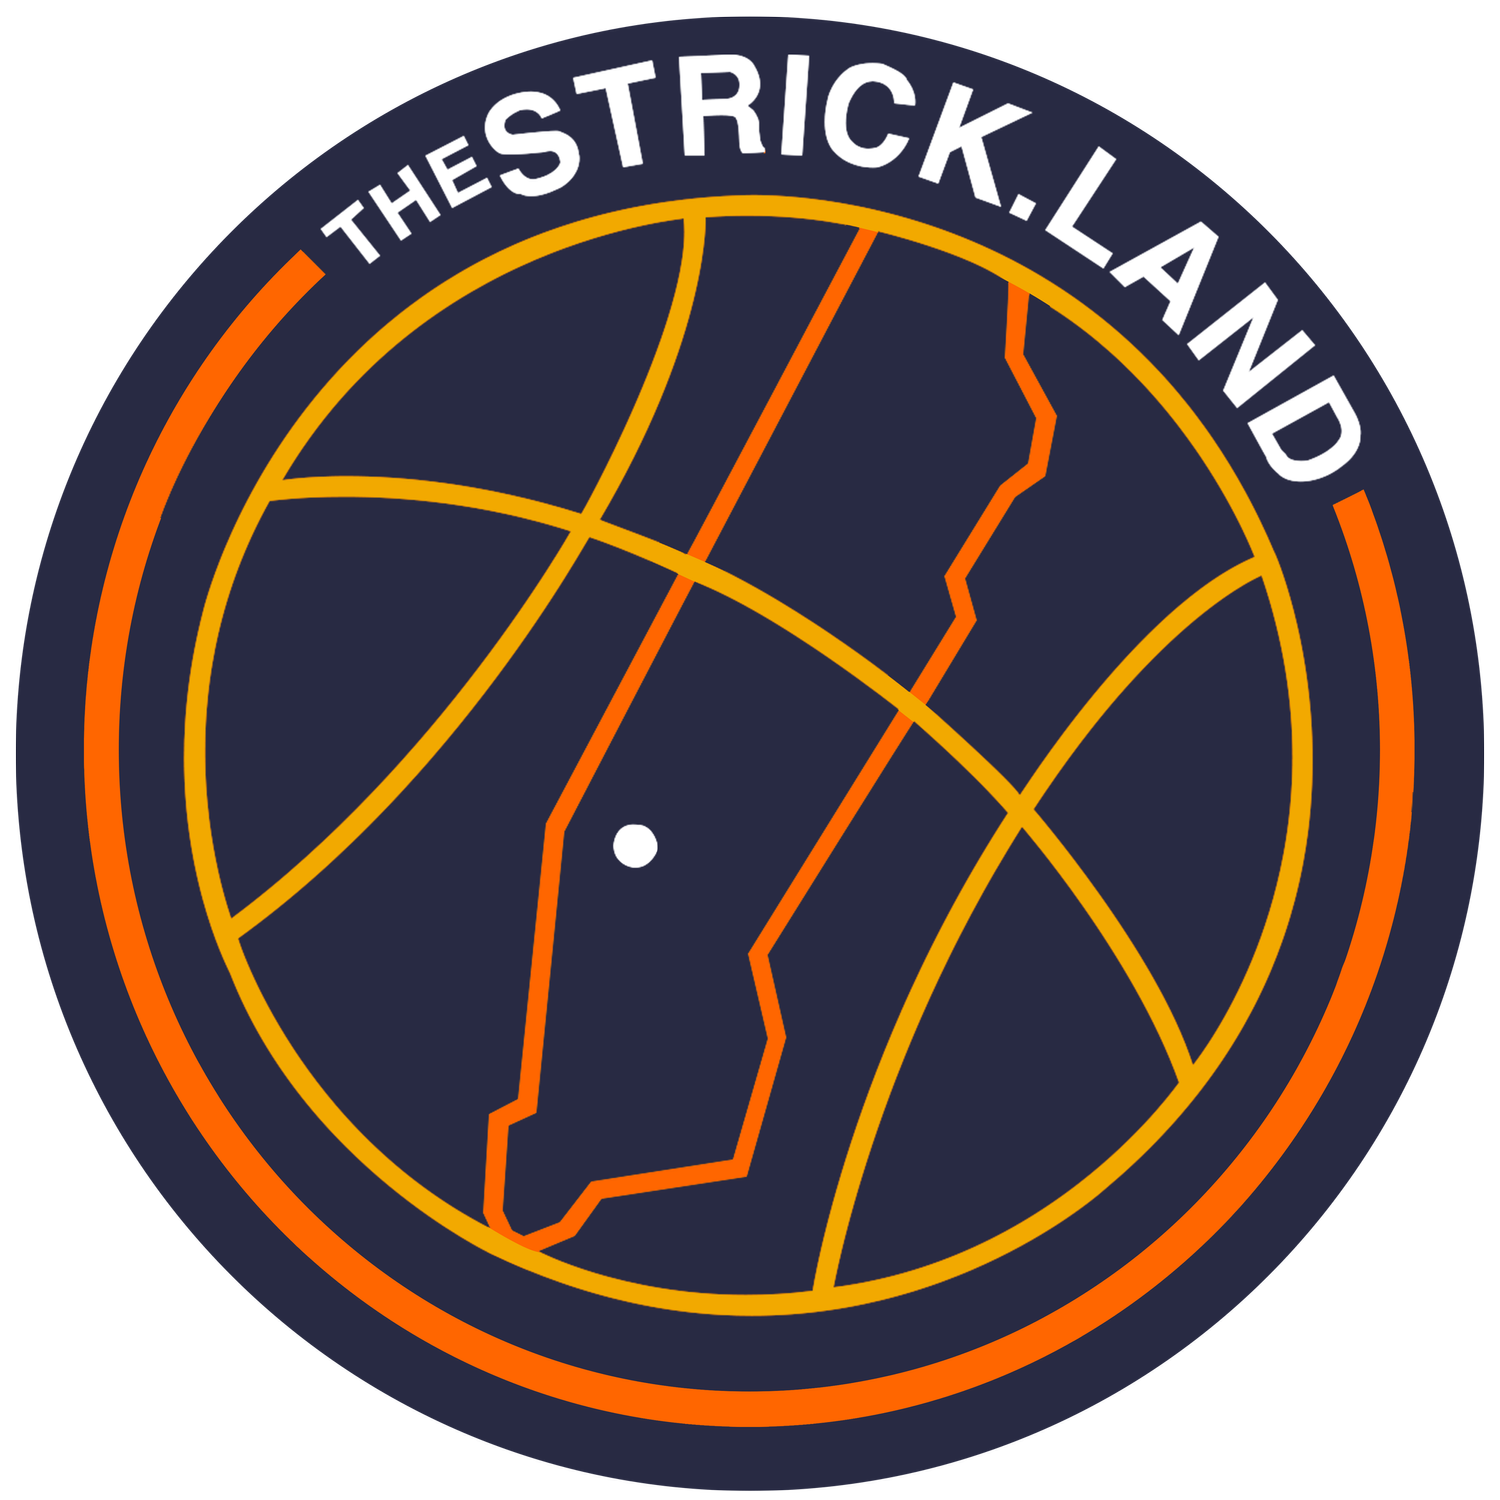 The Strickland: A New York Knicks Site Guaranteed To Make &#39;Em Jump